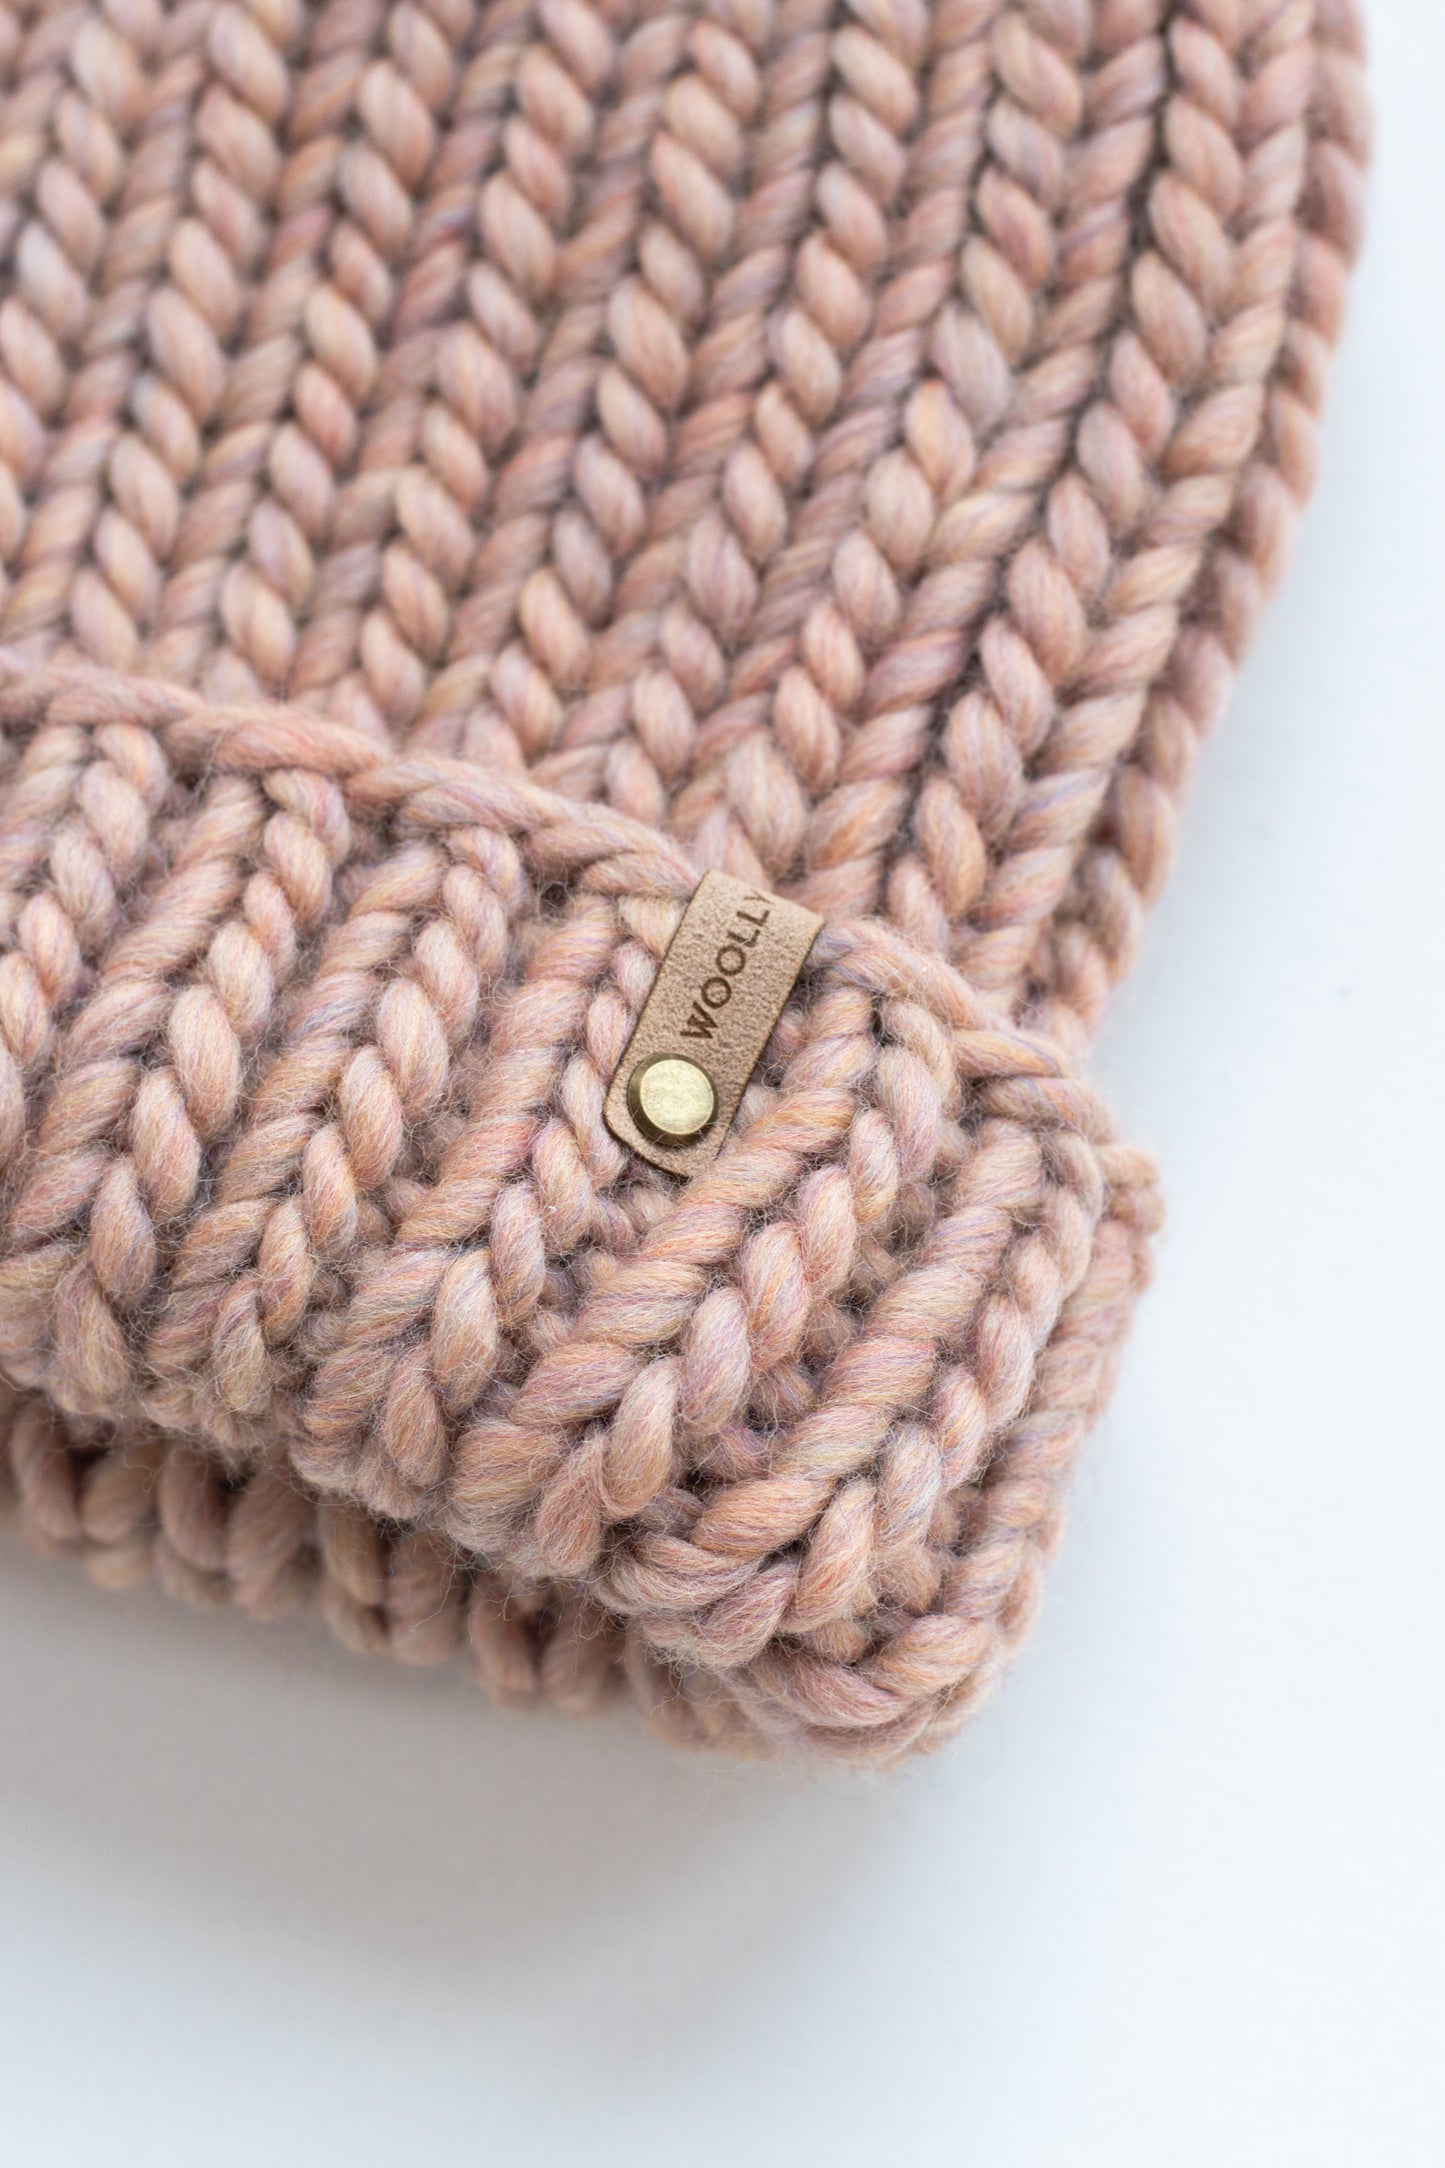 Blush Pink Peruvian Wool Ribbed Knit Hat